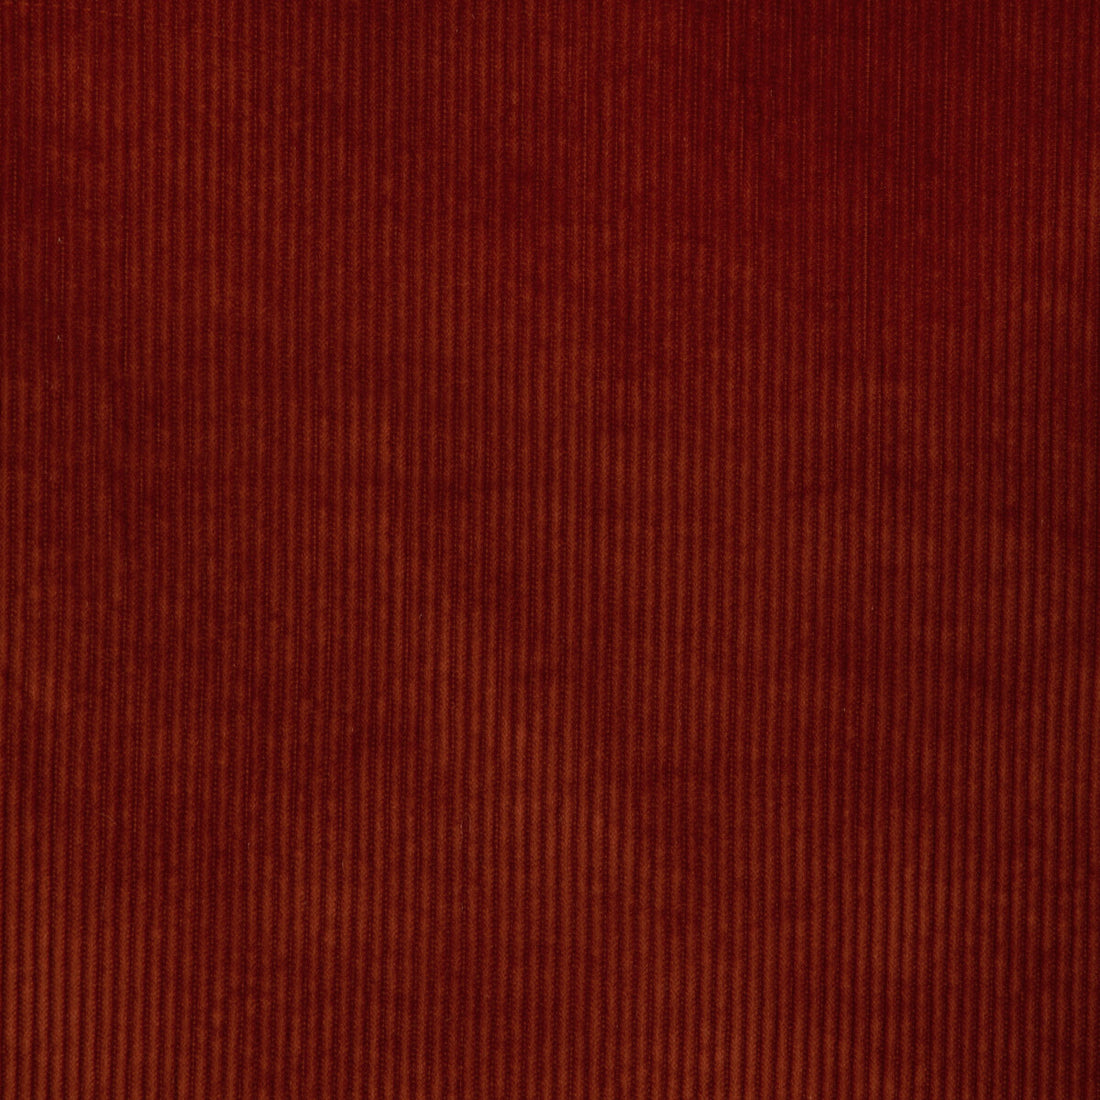 Kravet Smart fabric in 37006-912 color - pattern 37006.912.0 - by Kravet Smart